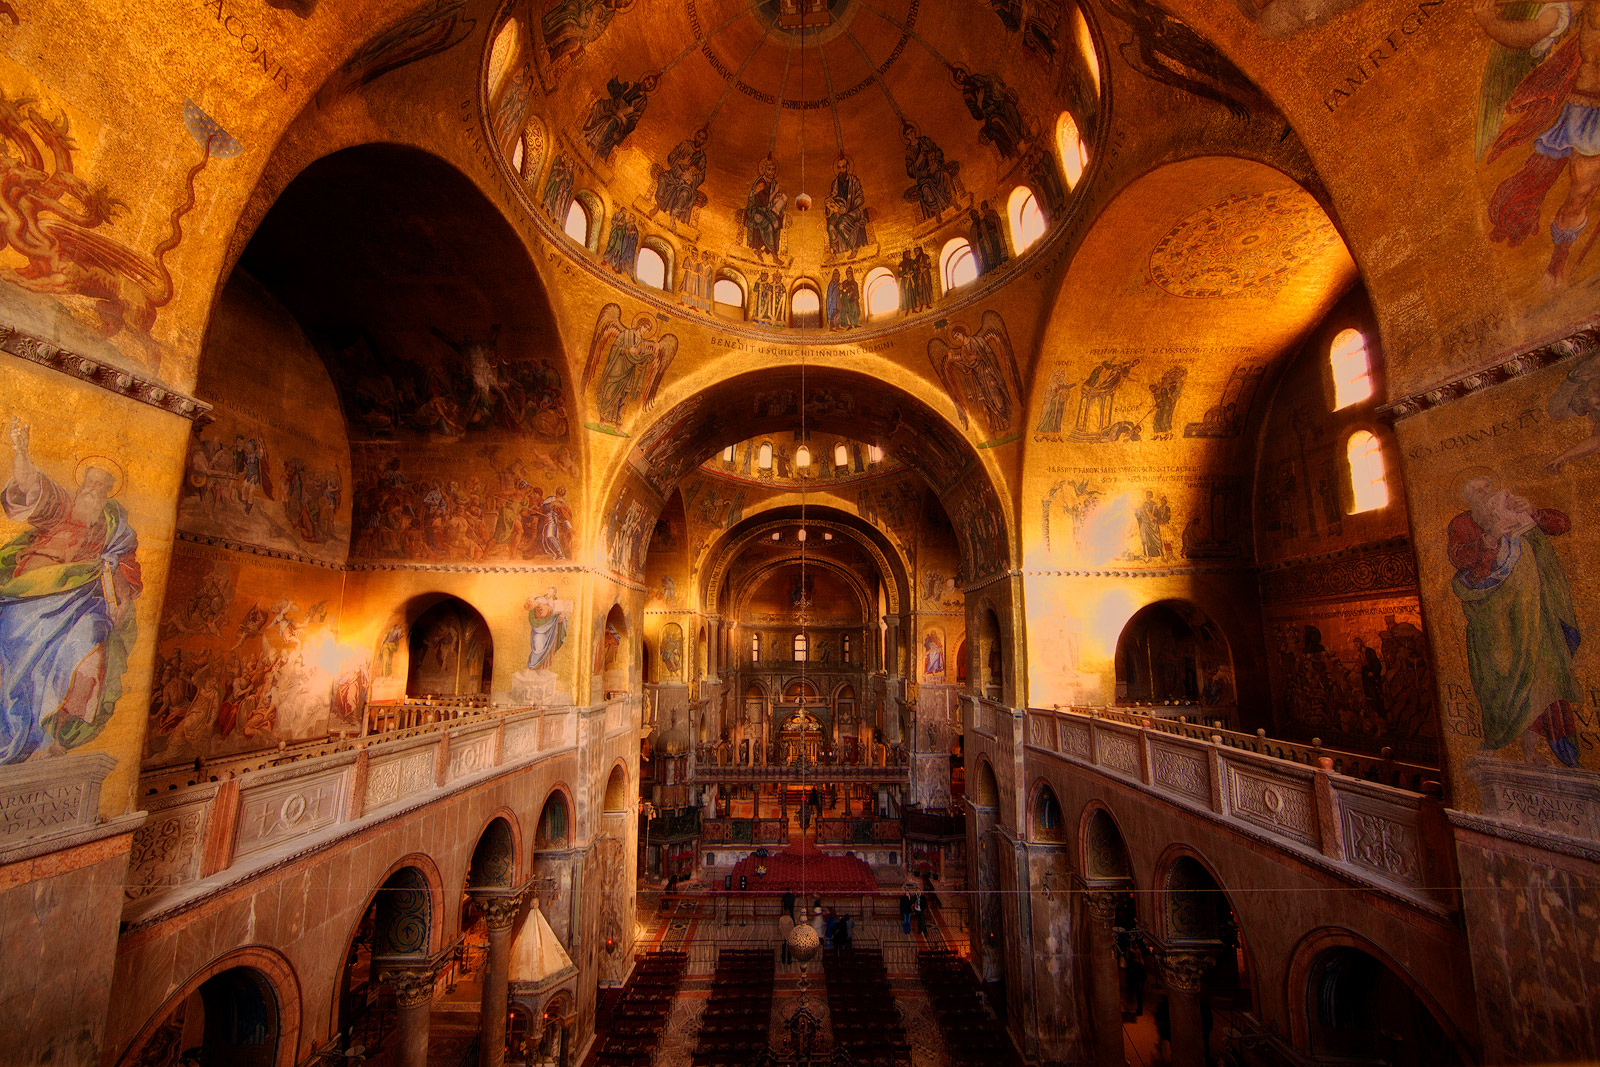 The beautiful gold interior of St. Mark's Basilica